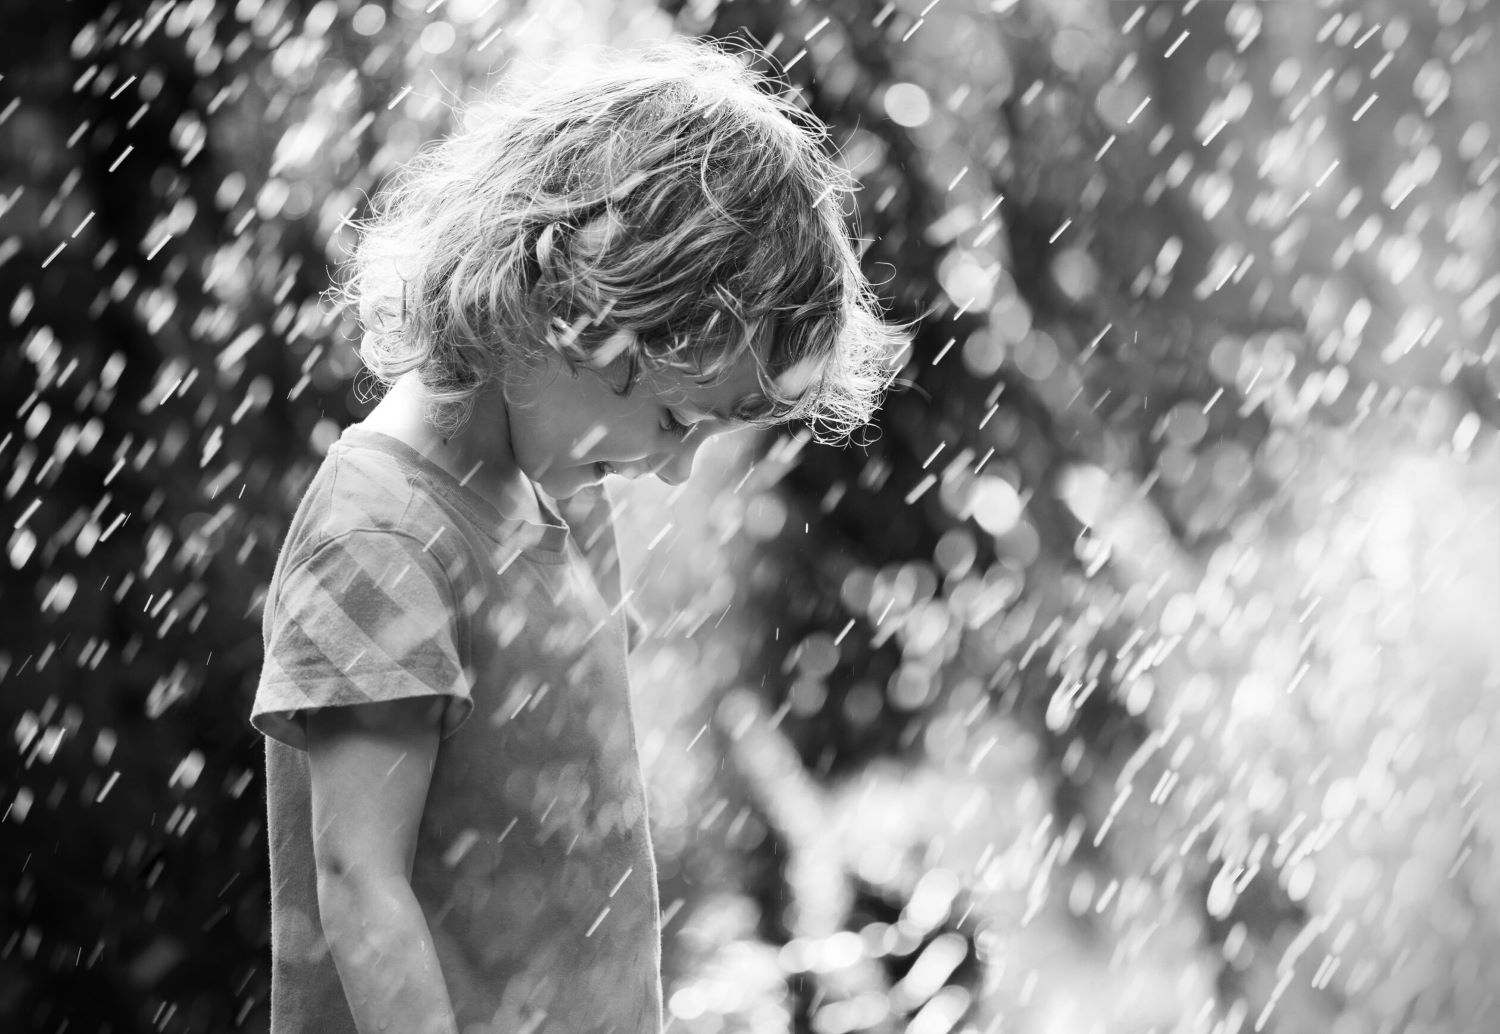 A boy and the summer rain